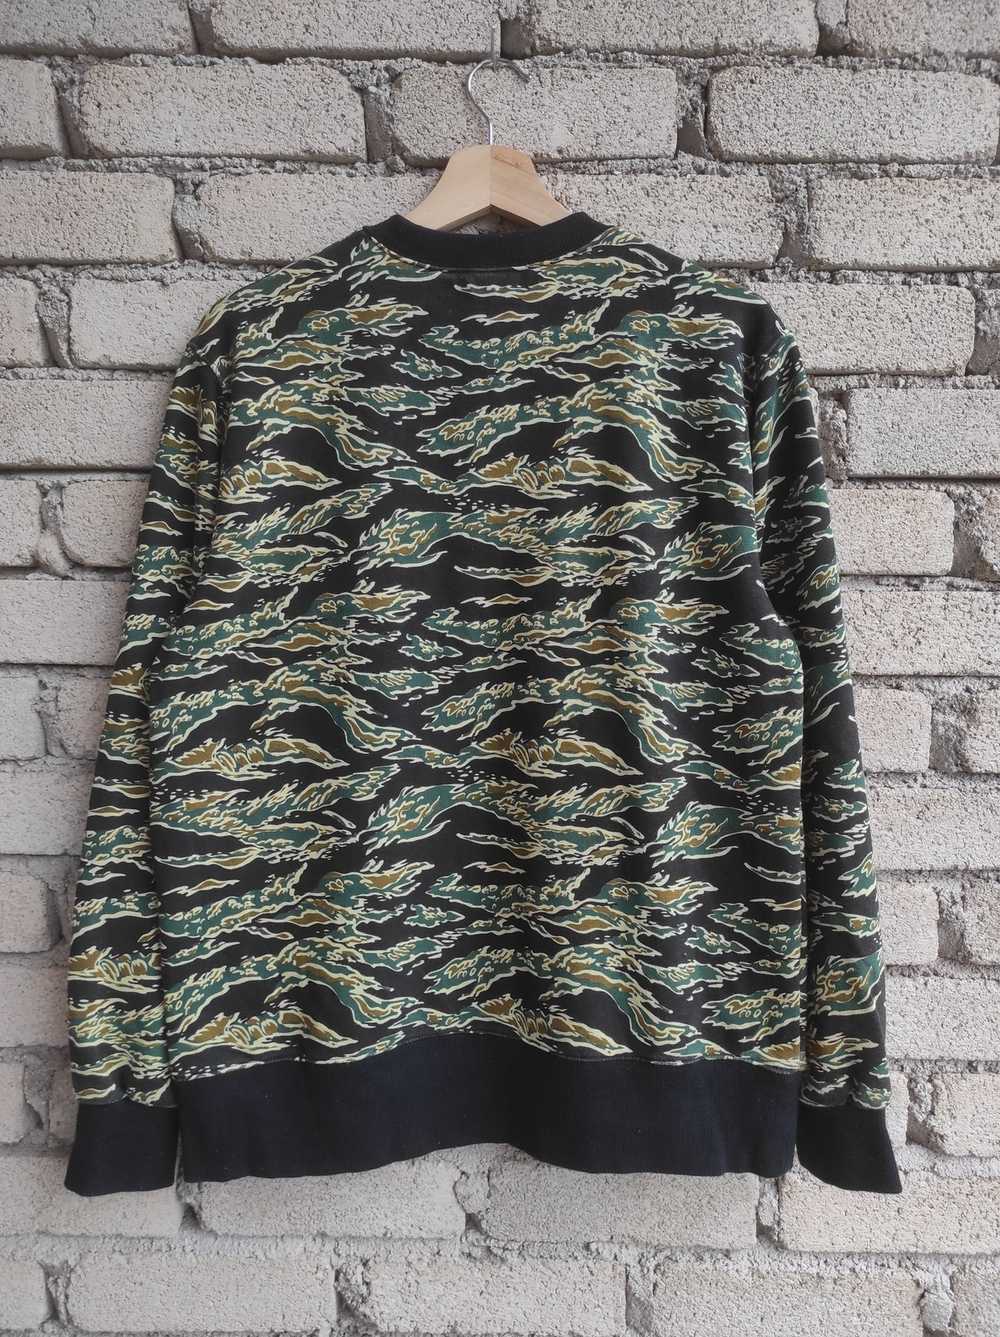 Camo × Other × Rare lifemax camo tiger sweatshirt - image 3